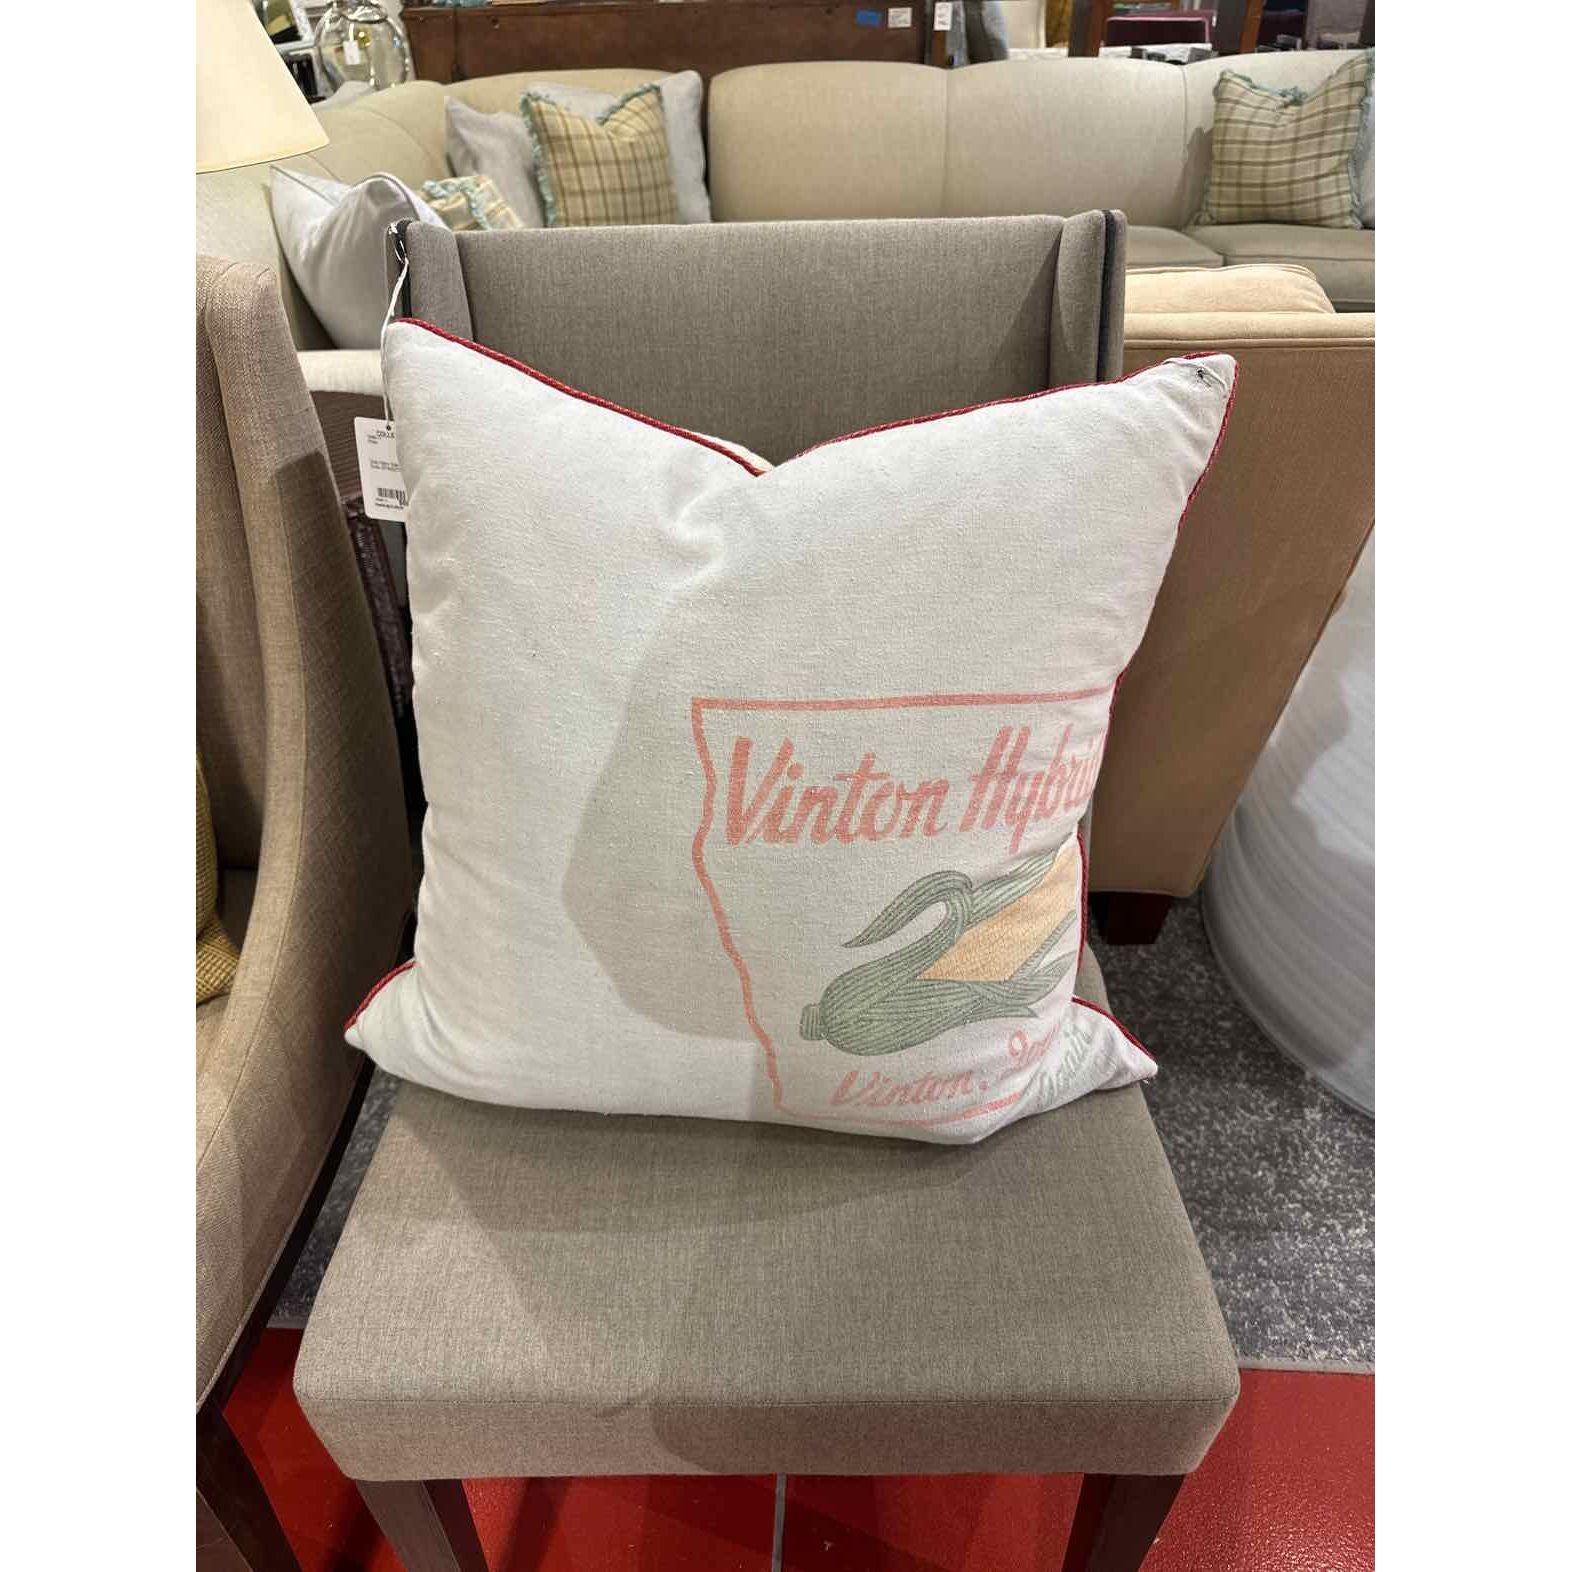 Vinton Hybrid Corn Pillow w/ Red Piping